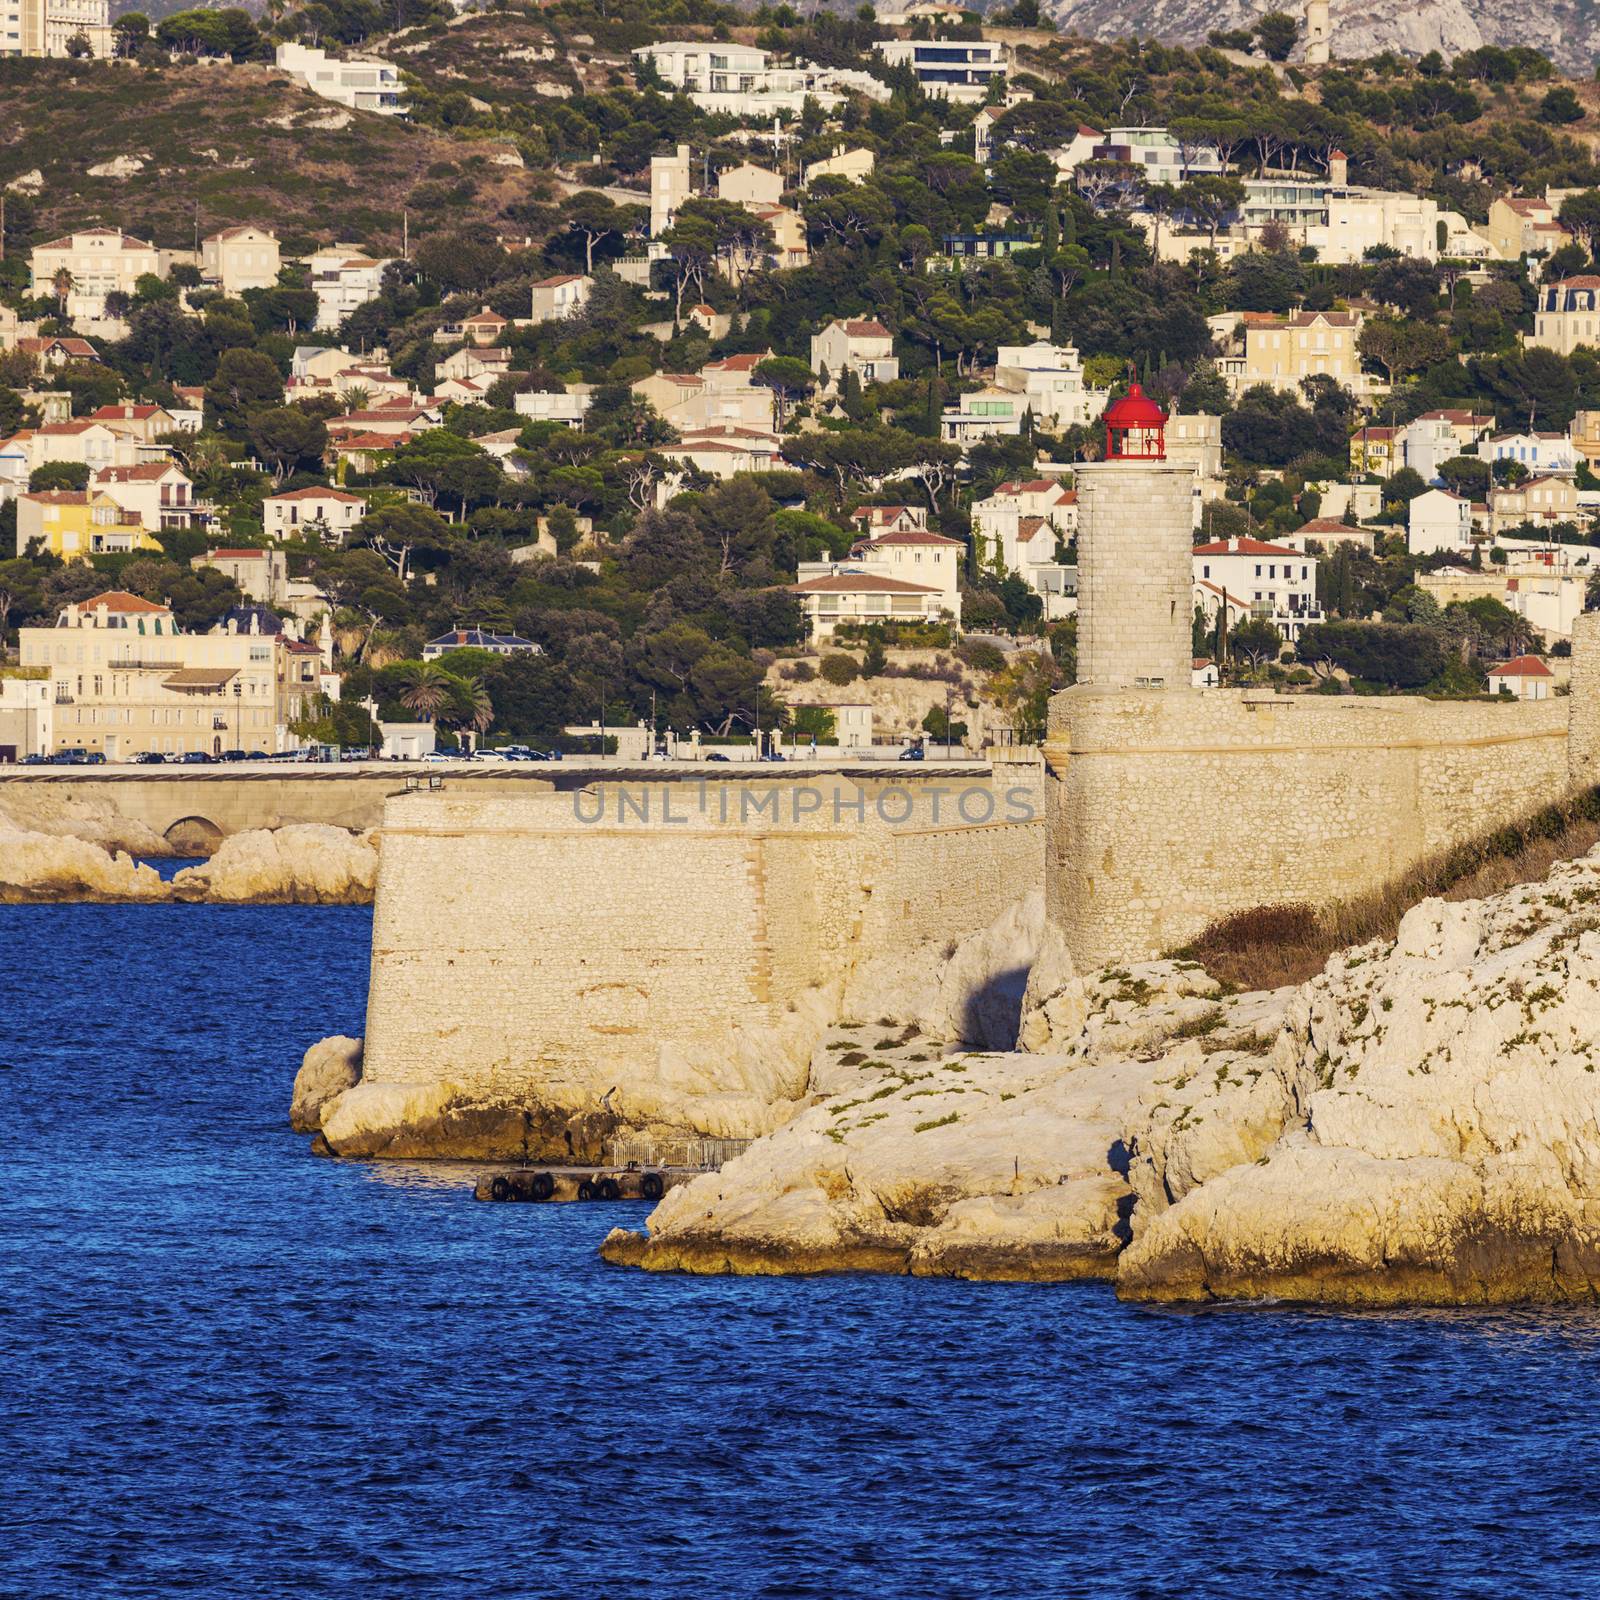 Lighthouse on If island. Marseille, Provence-Alpes-Cote d'Azur, France.